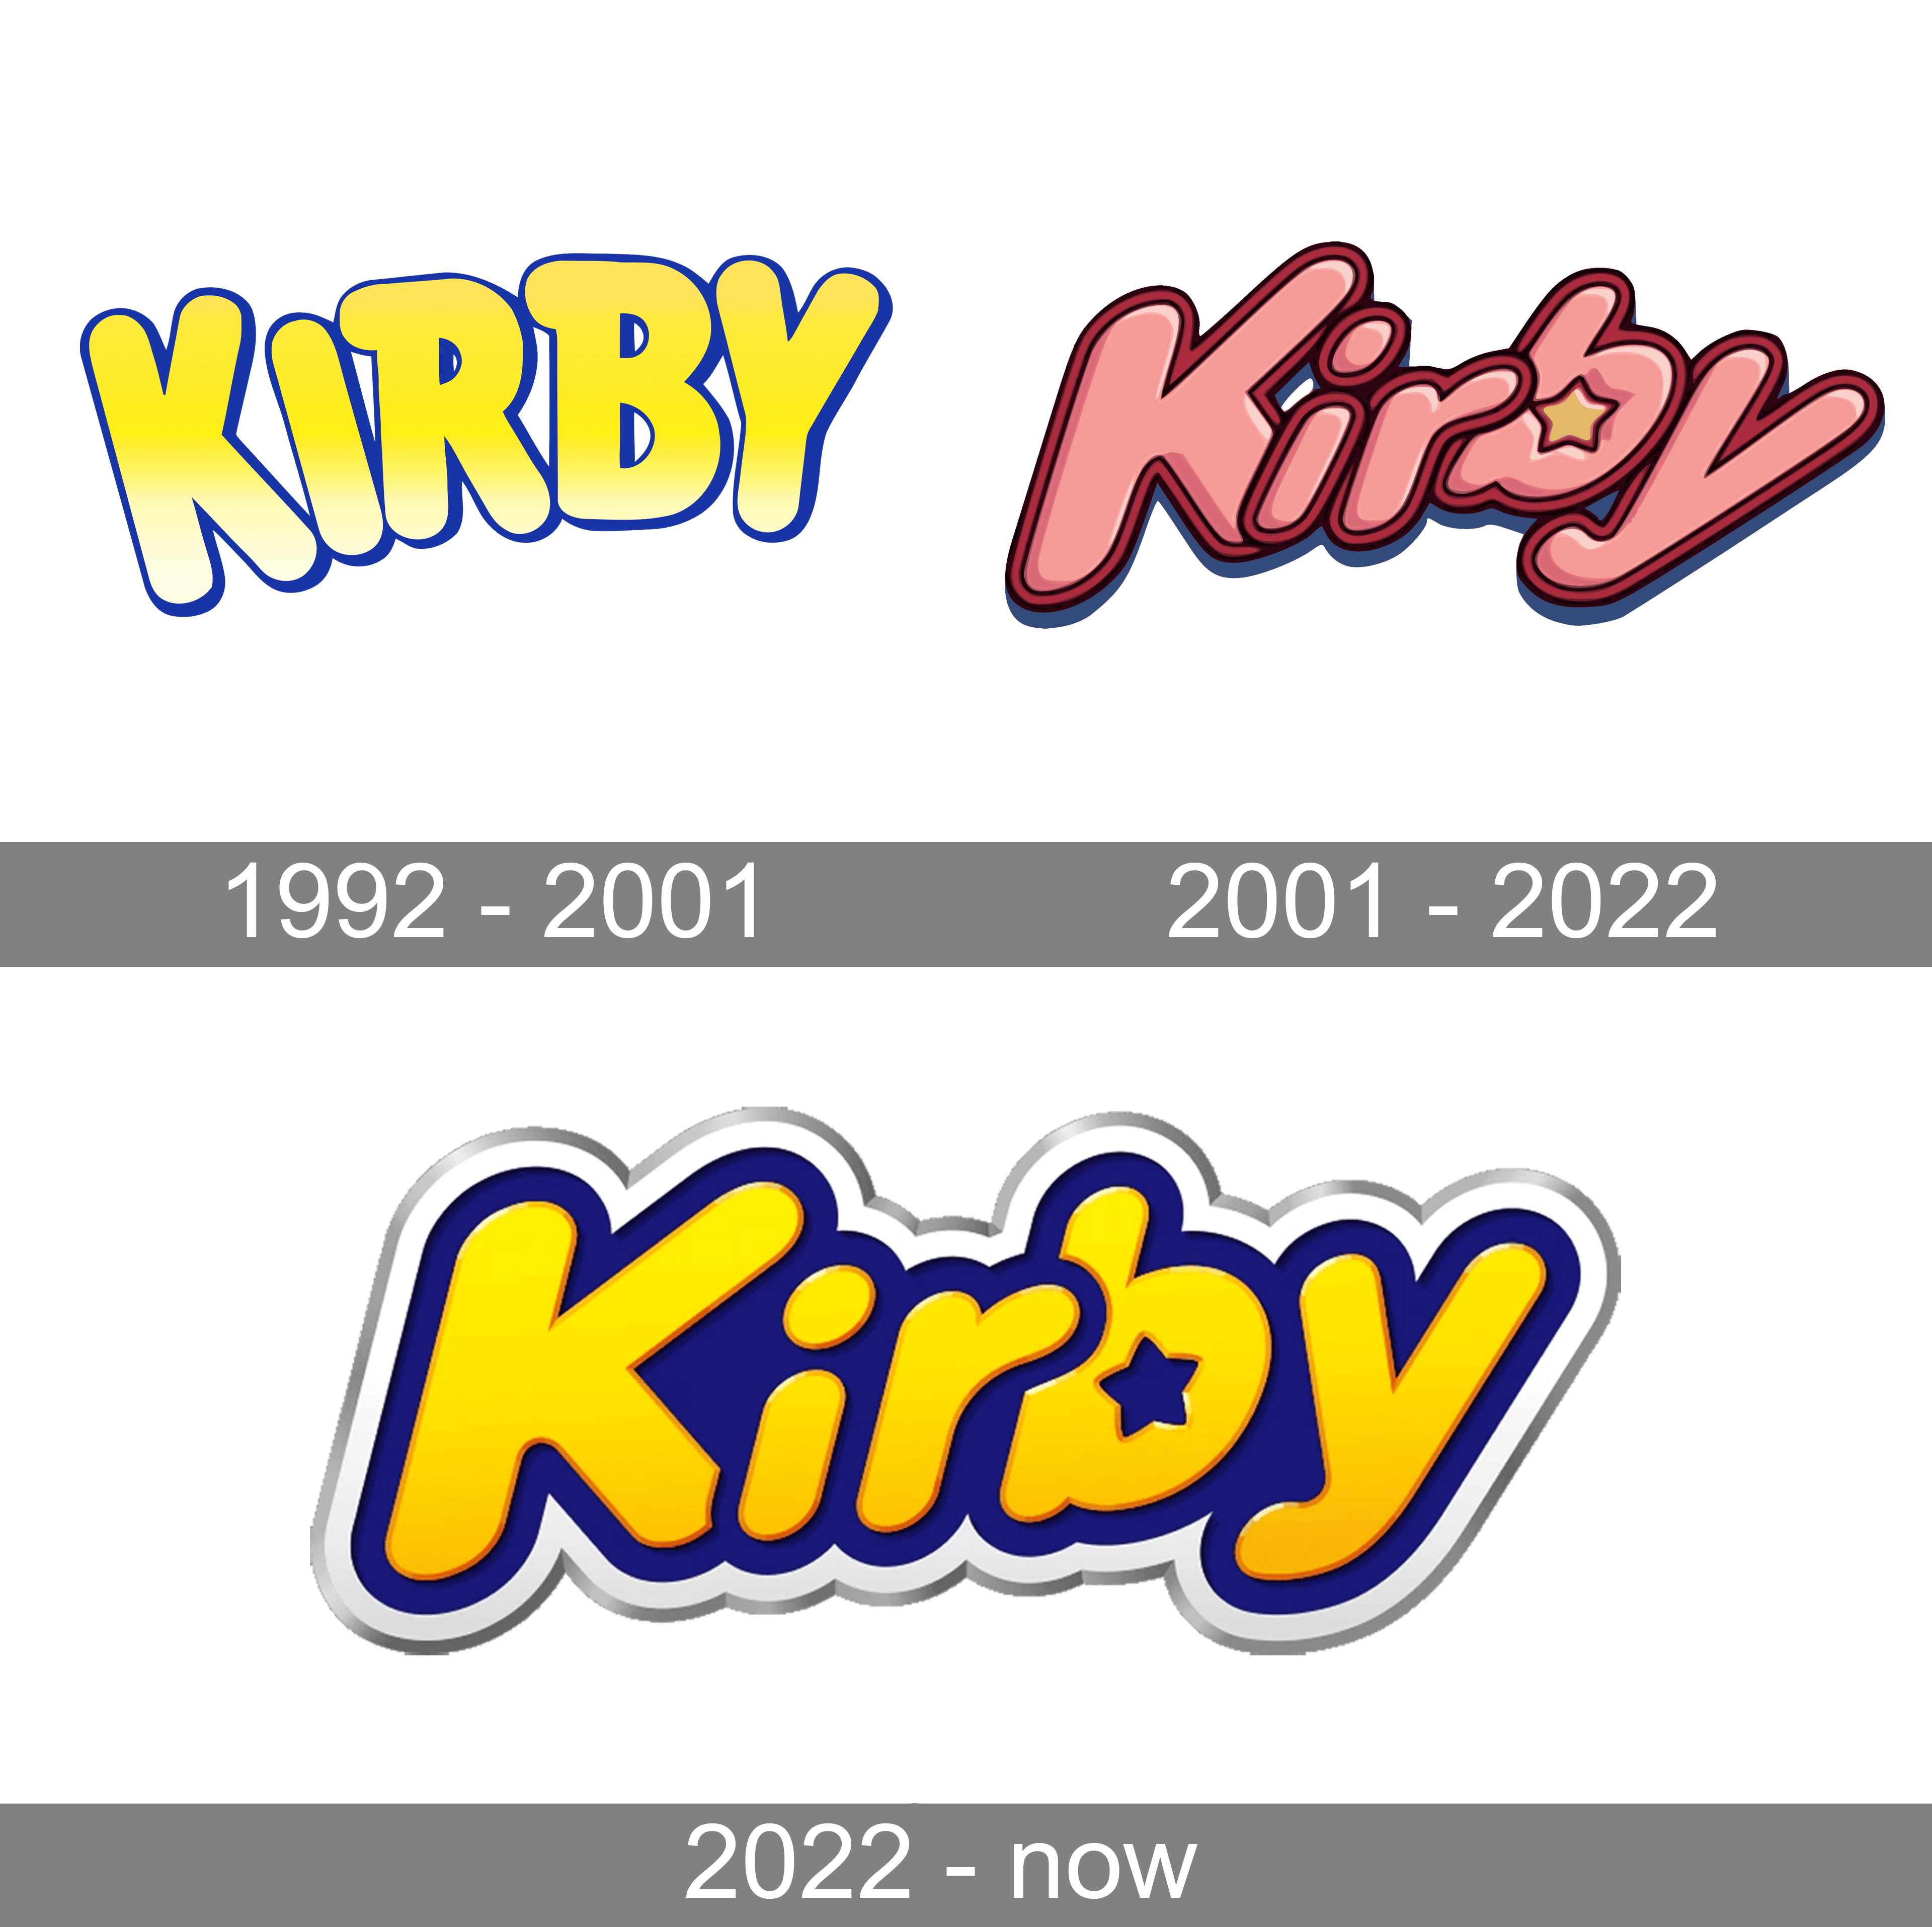 kirby logo font